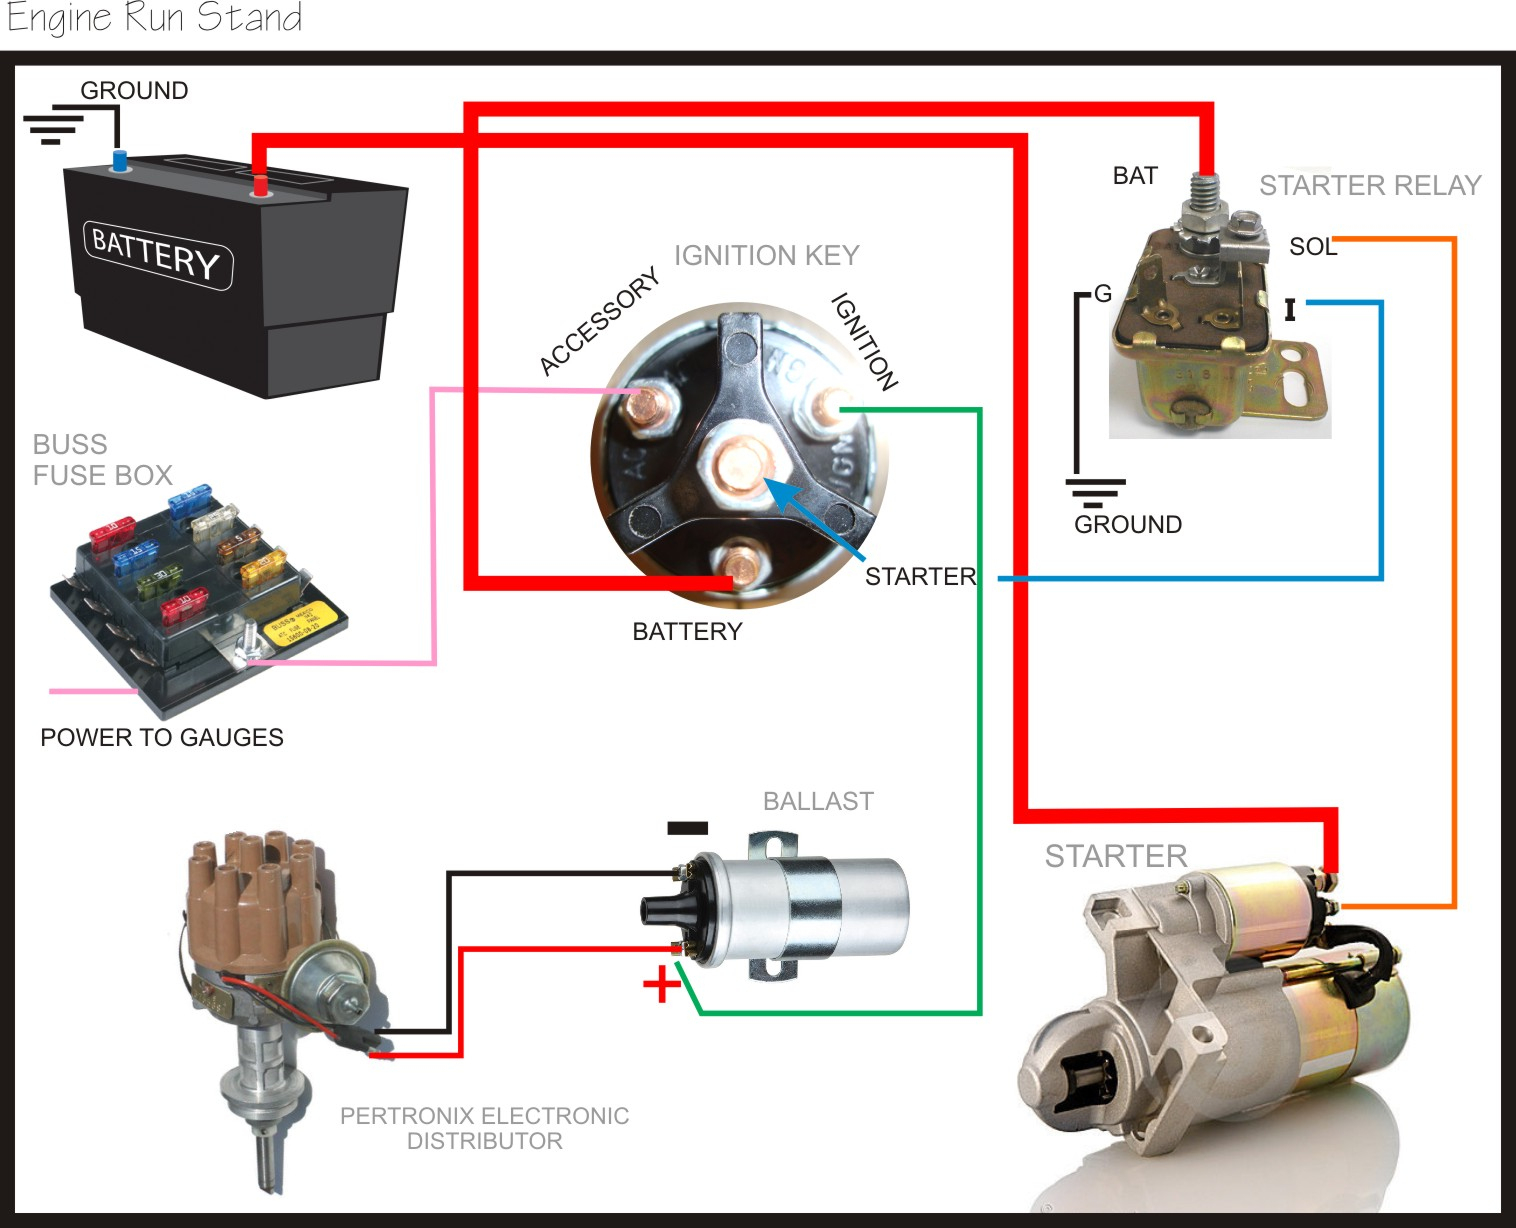 Help Wiring A Engine Run Stand Please! (Easy Diagram) | Moparts - Kohler Ignition Switch Wiring Diagram